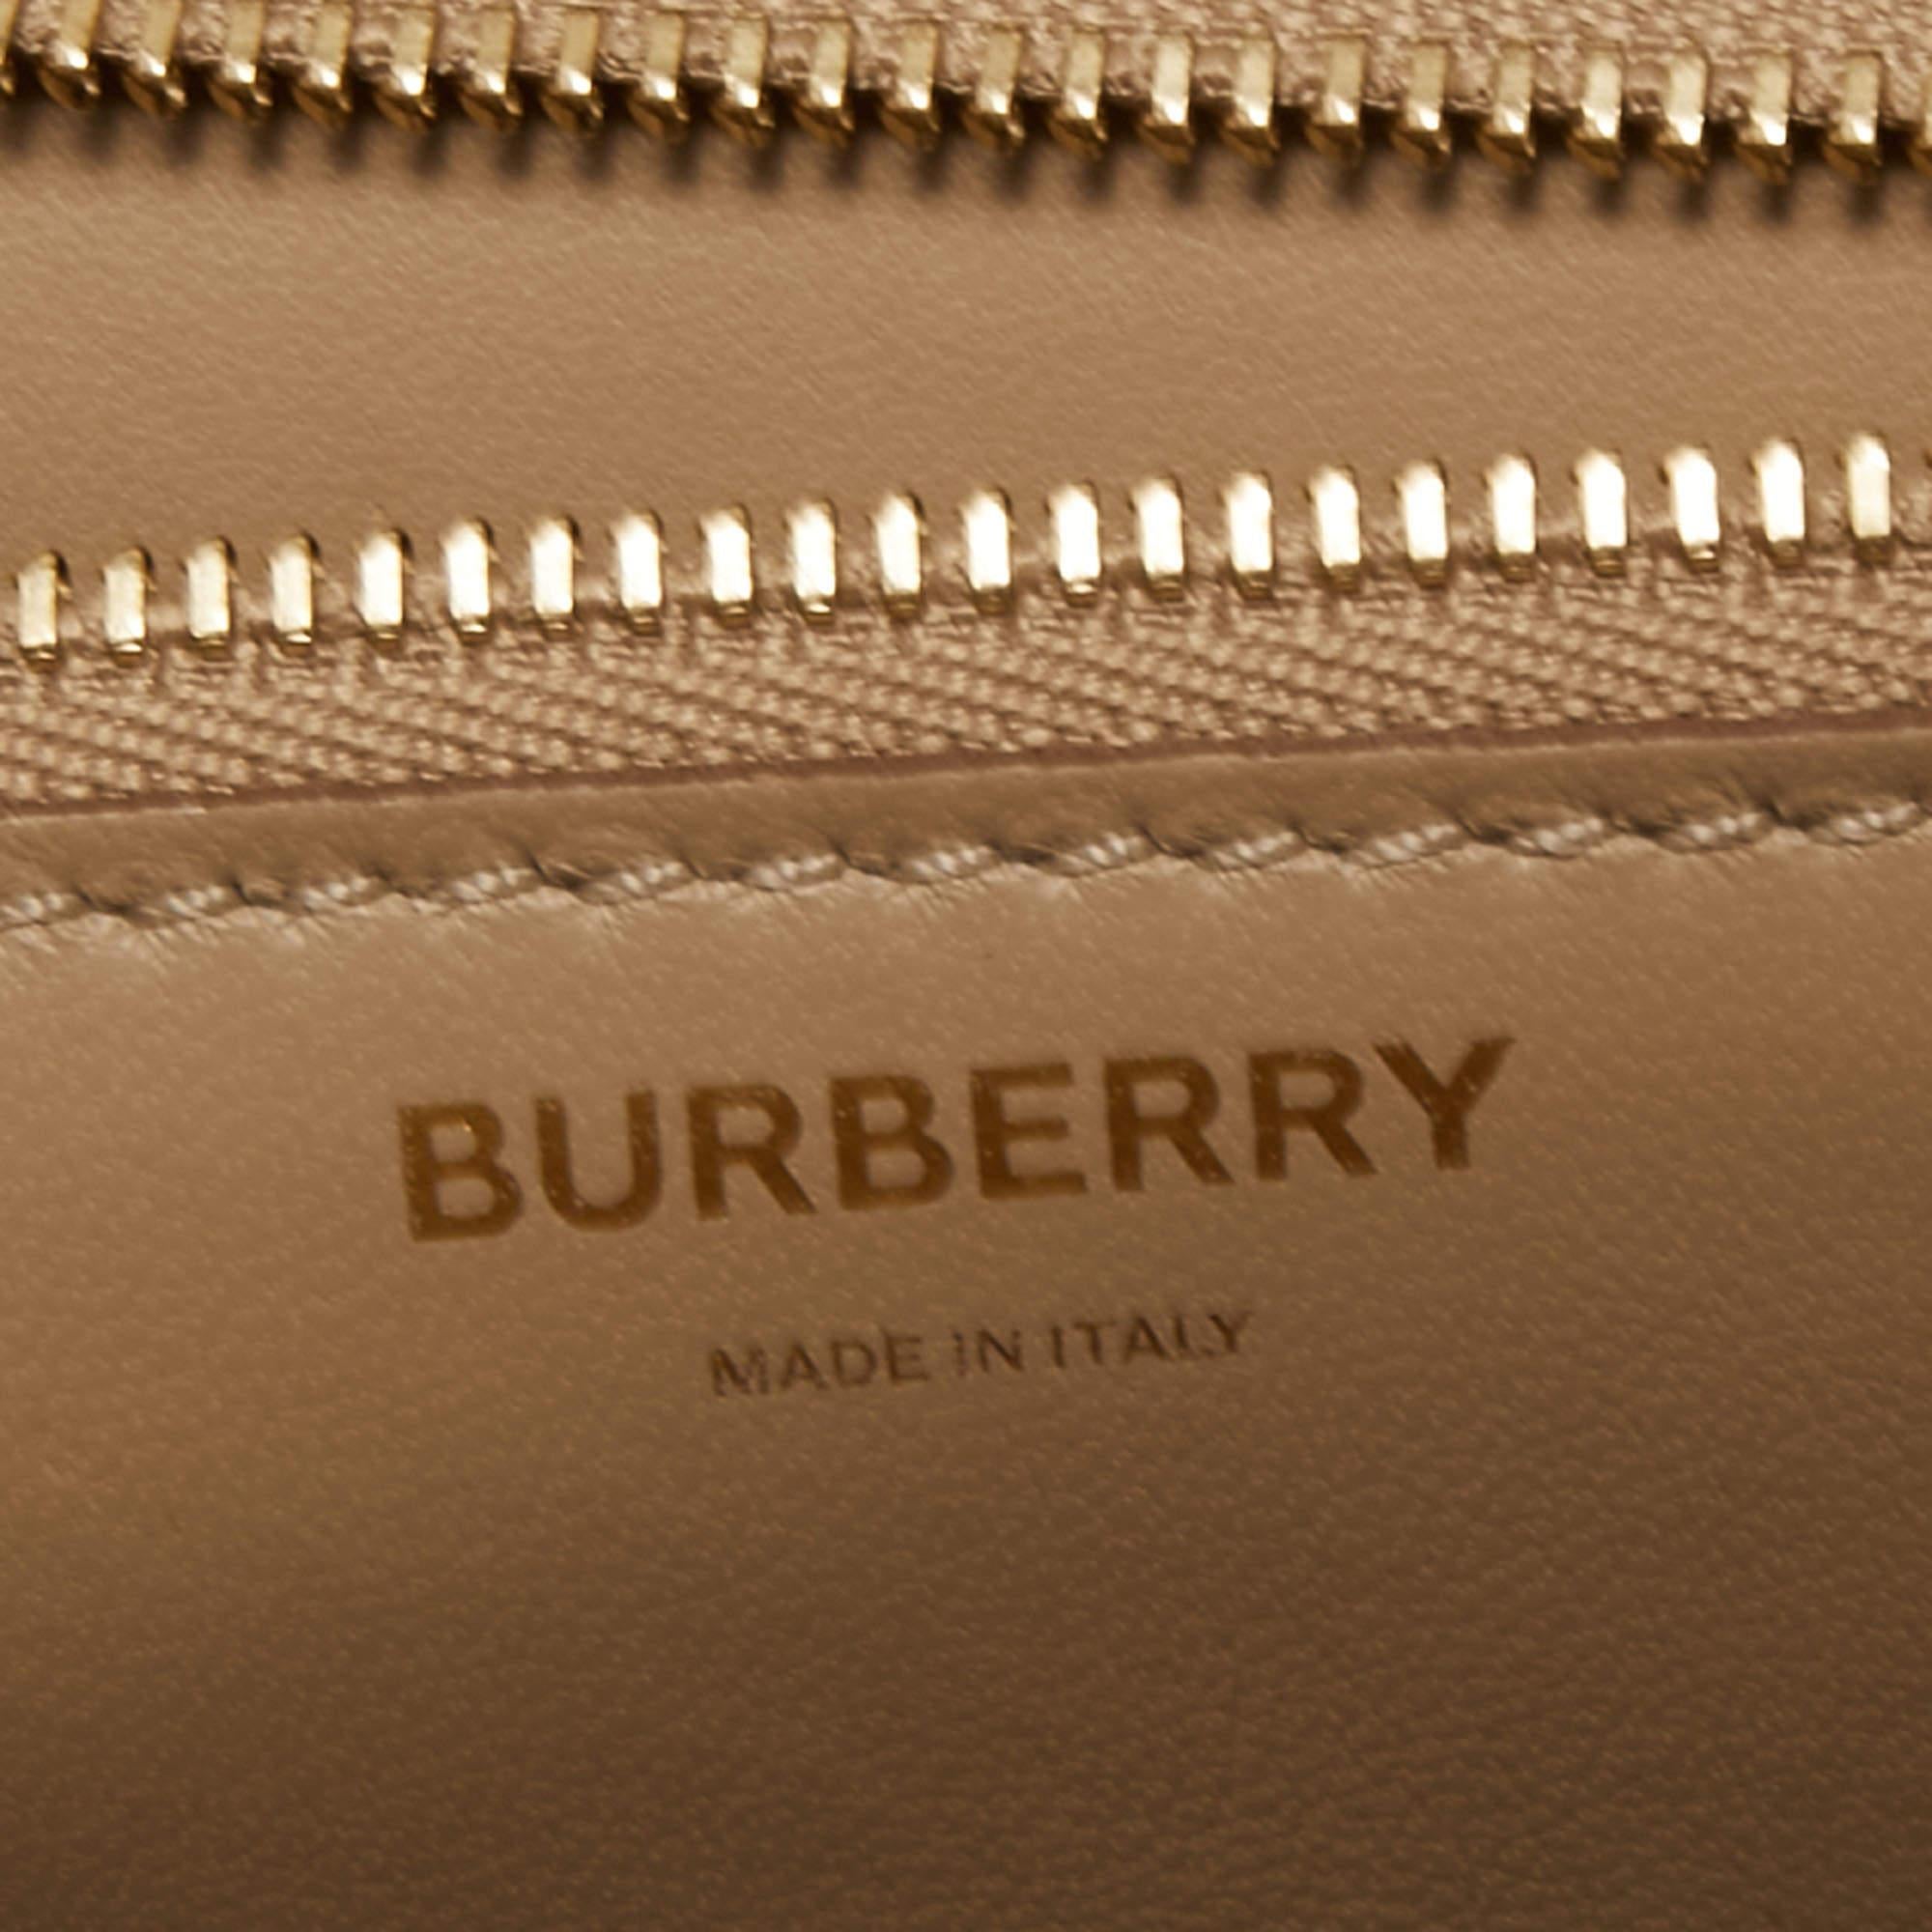 Burberry Beige Grain Leather Medium TB Shoulder Bag 5